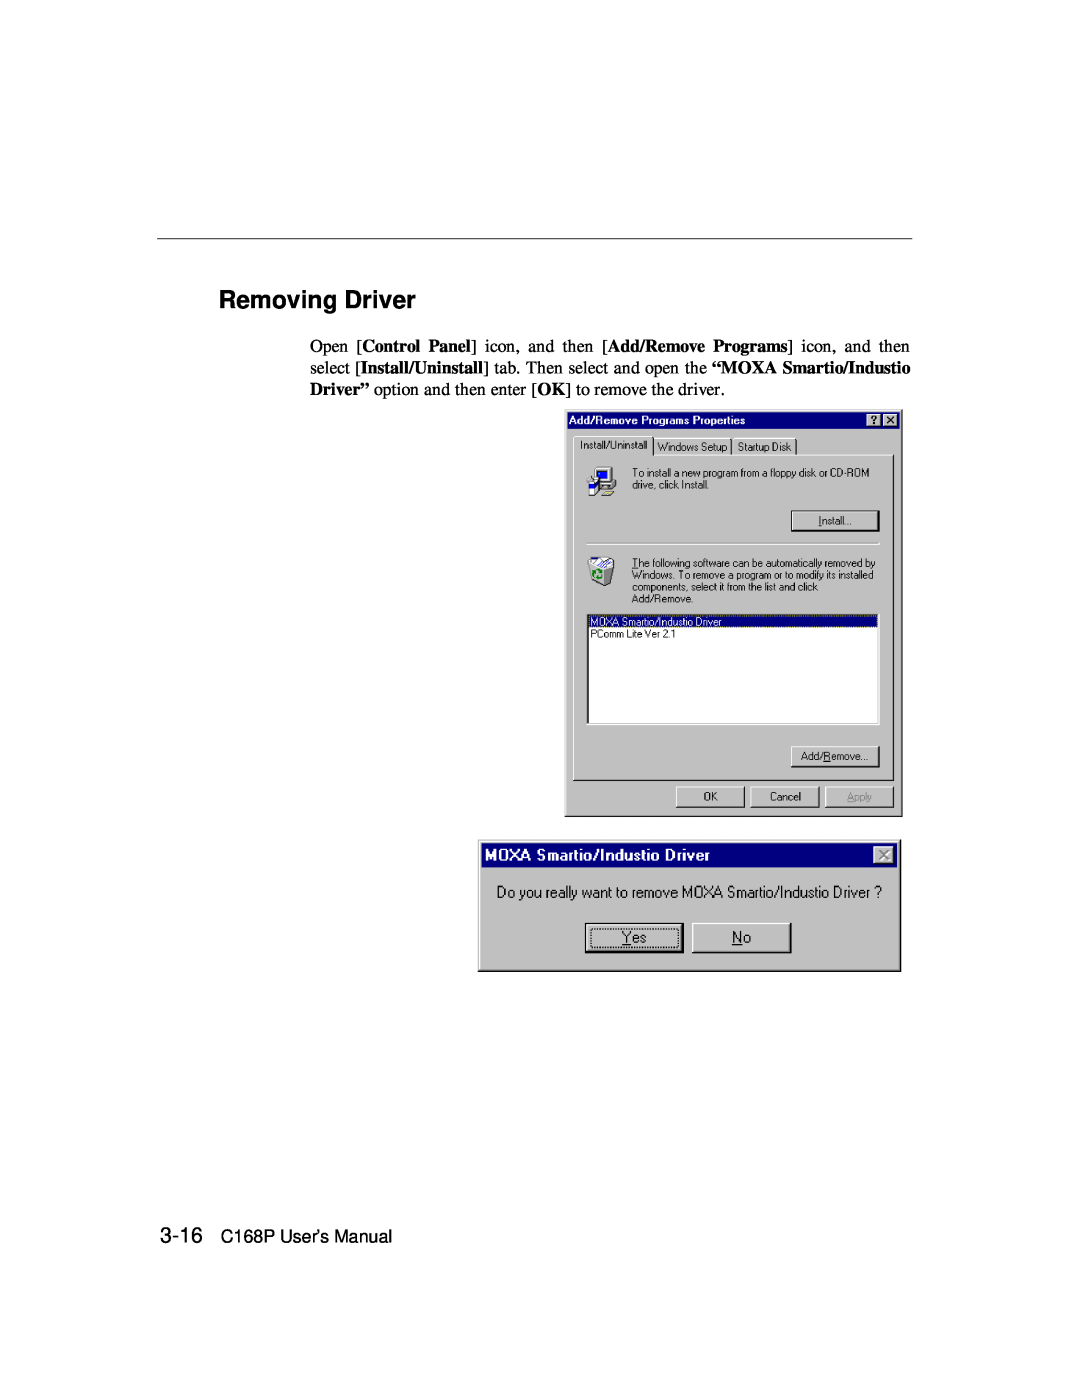 Moxa Technologies user manual Removing Driver, 3-16 C168P User’s Manual 